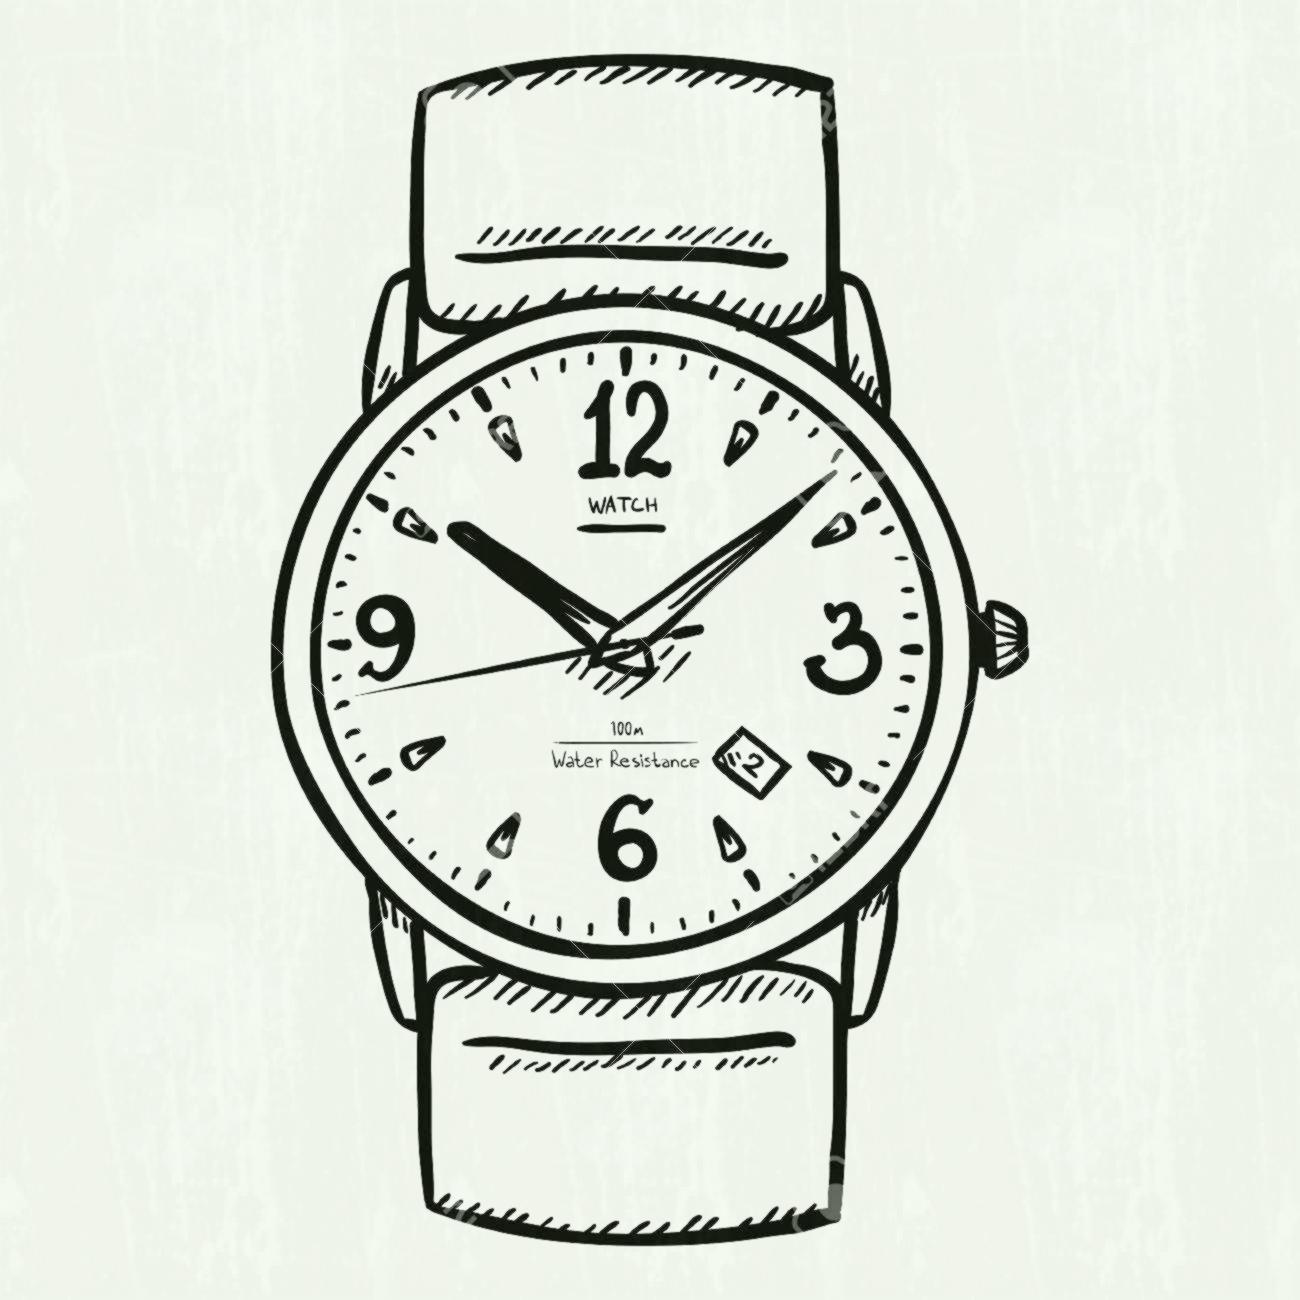 Wrist watch clipart.